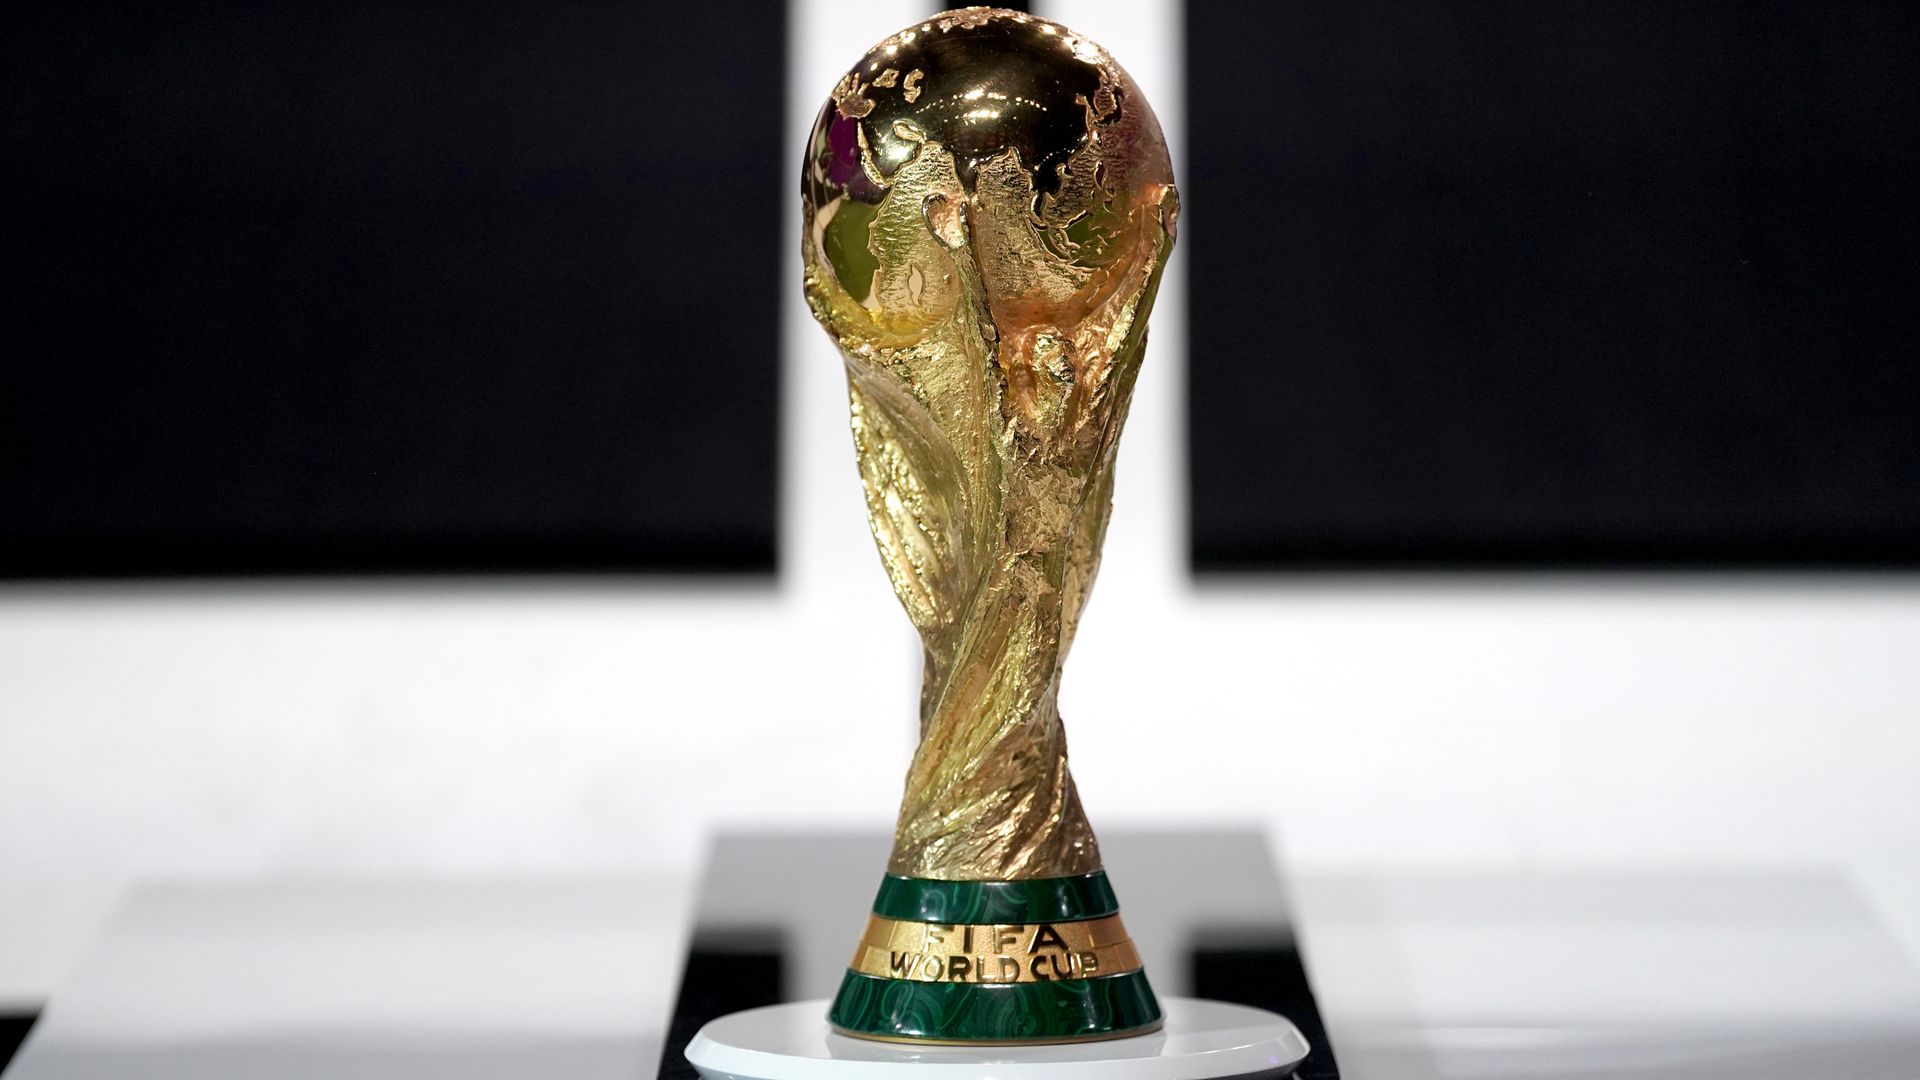 Qatar 2022 World Cup fixtures and venues